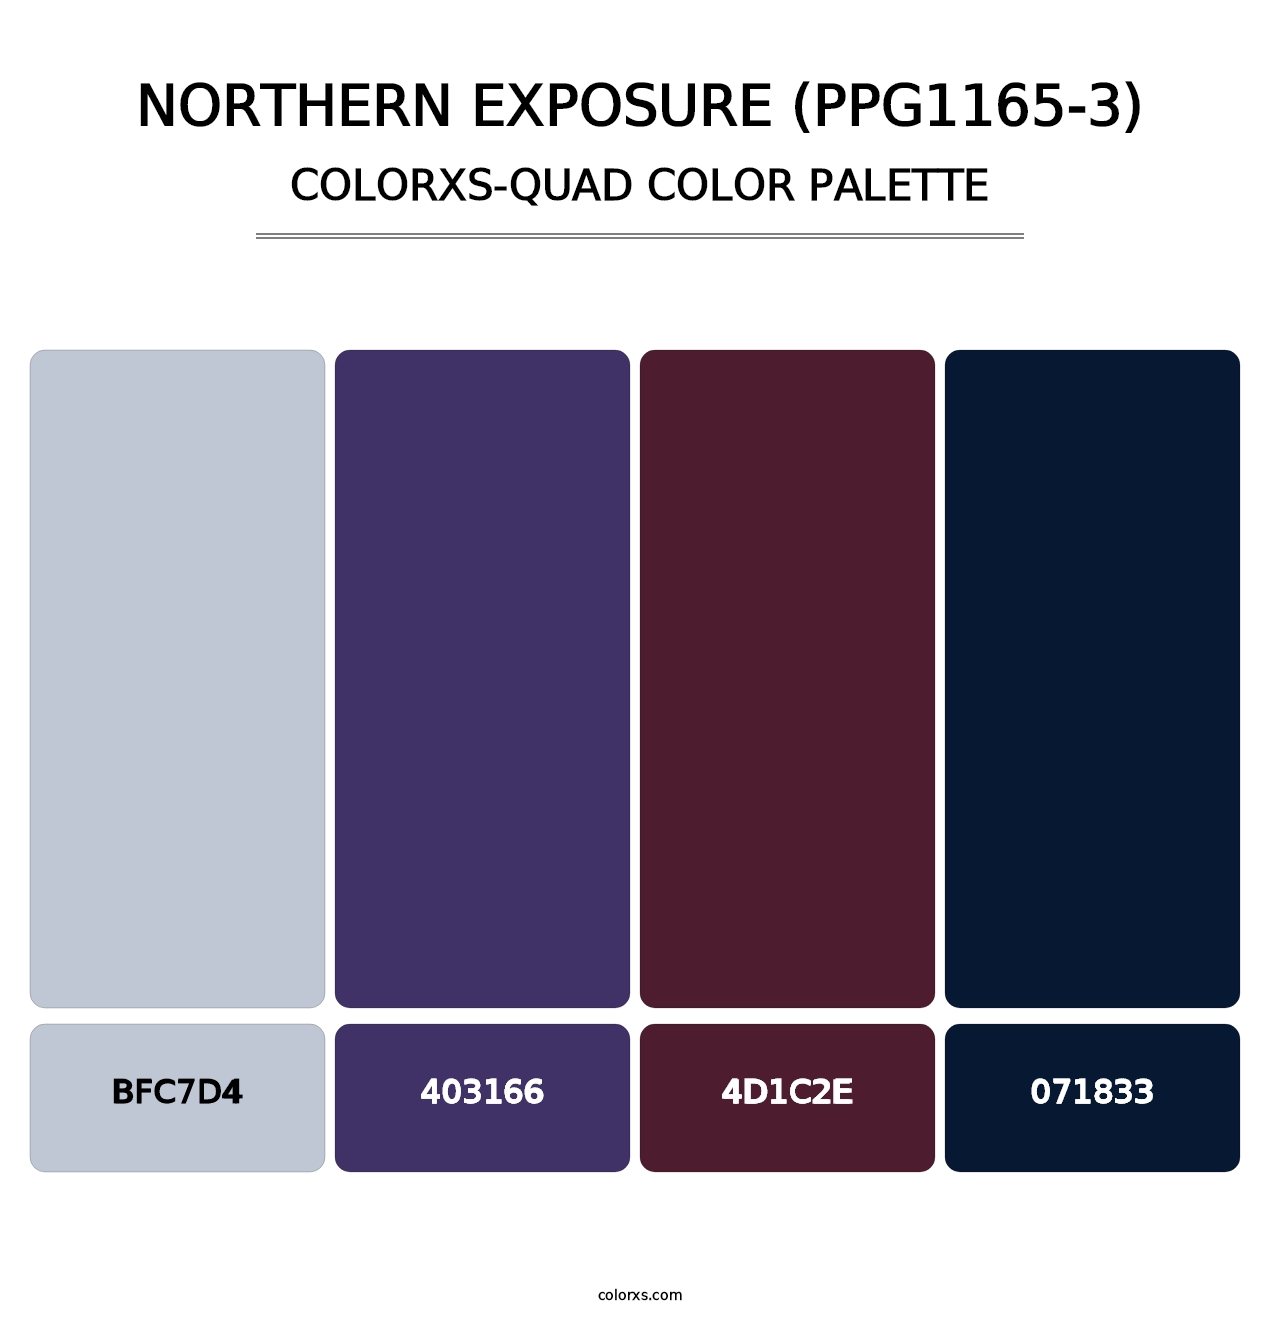 Northern Exposure (PPG1165-3) - Colorxs Quad Palette